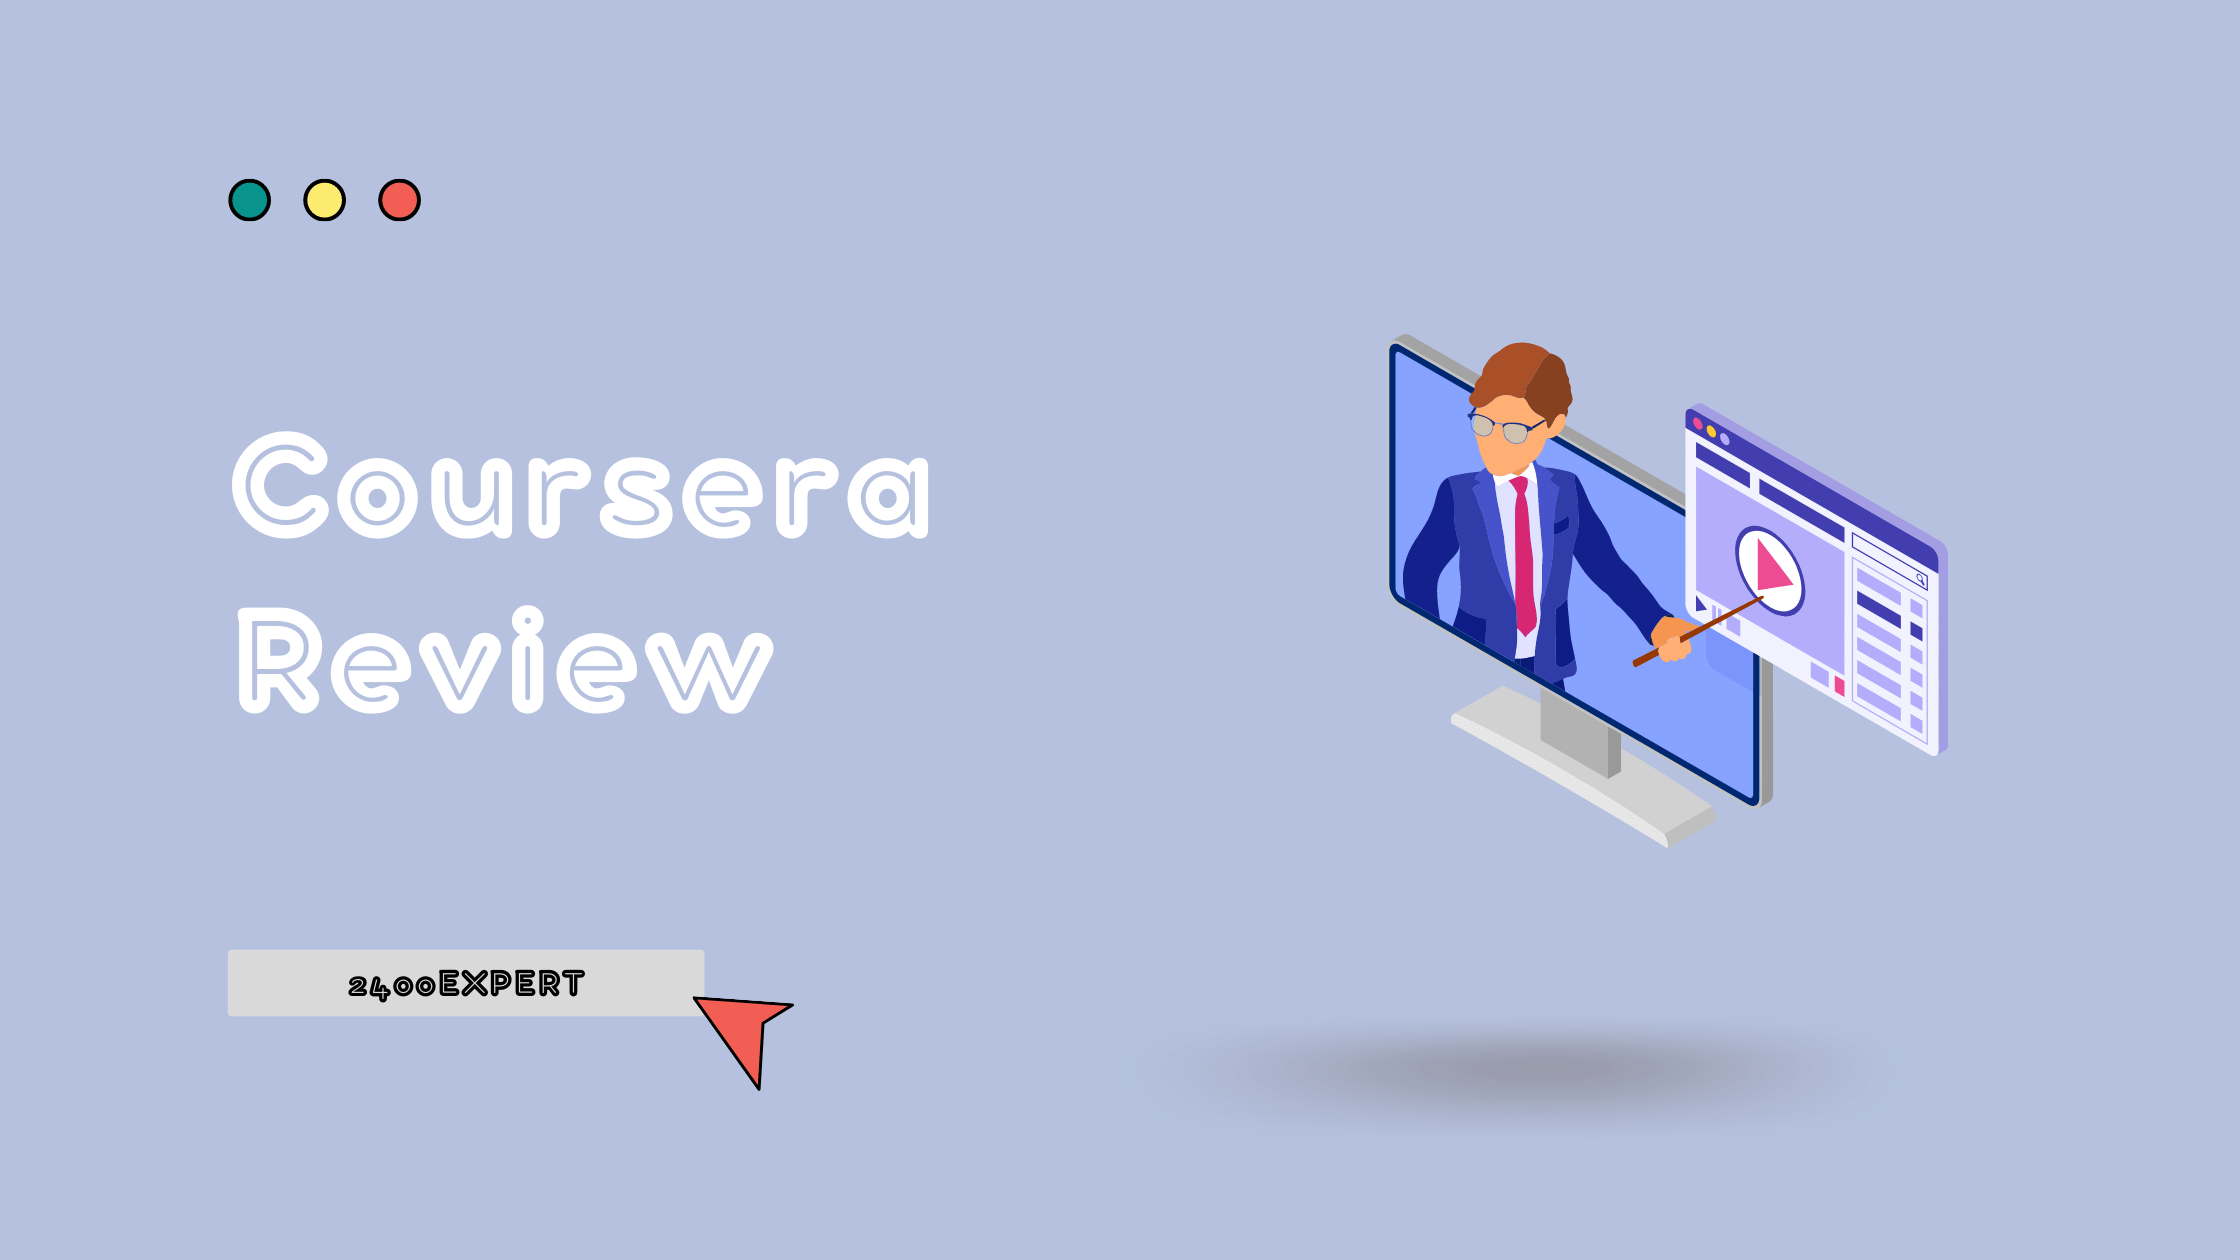 Coursera Review - 2400Expert